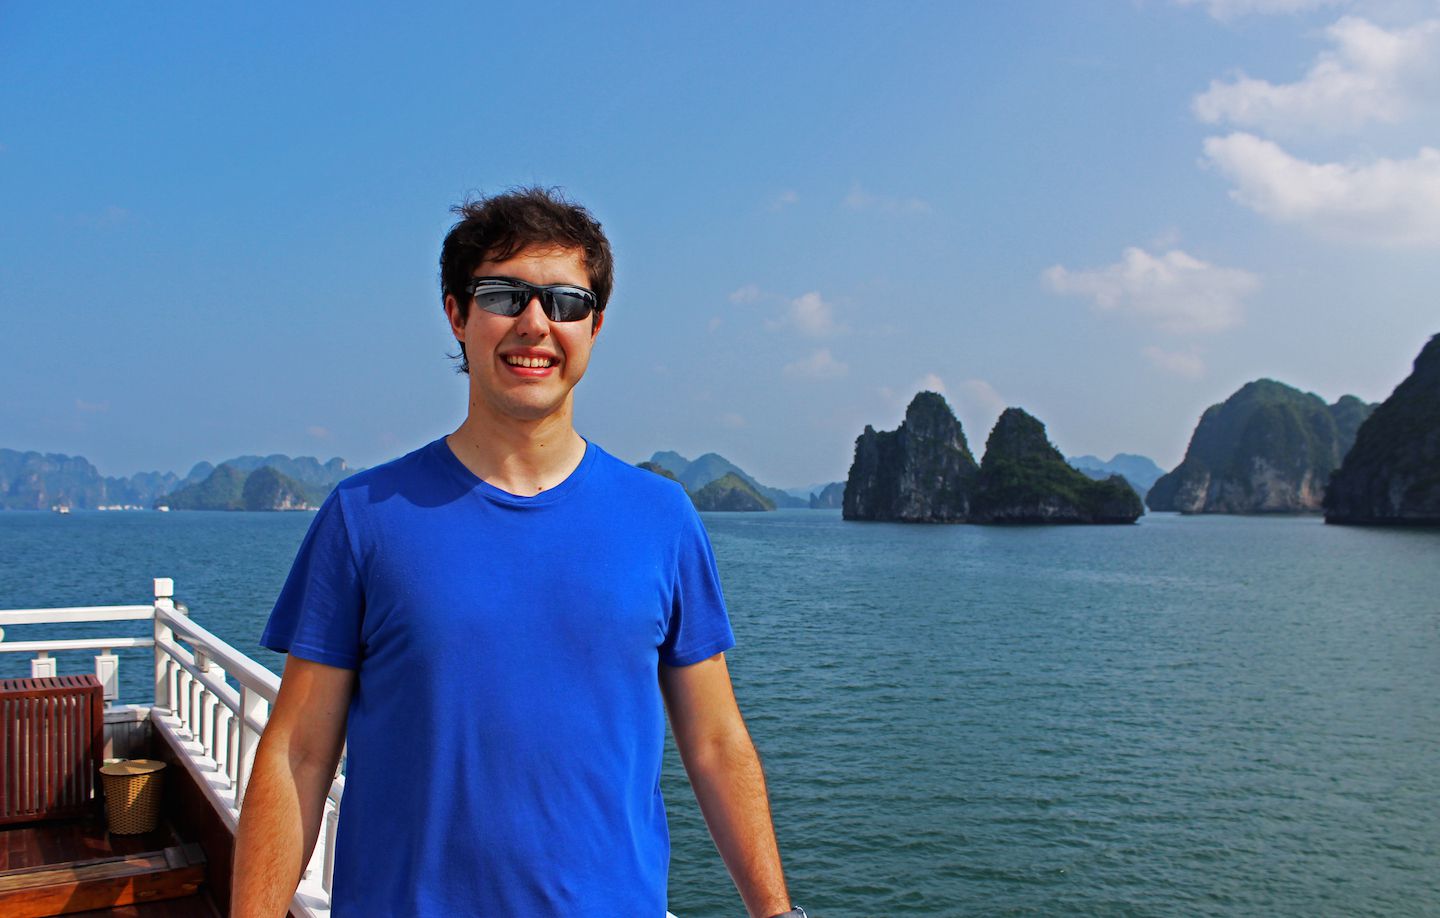 Carlos in Ha Long Bay